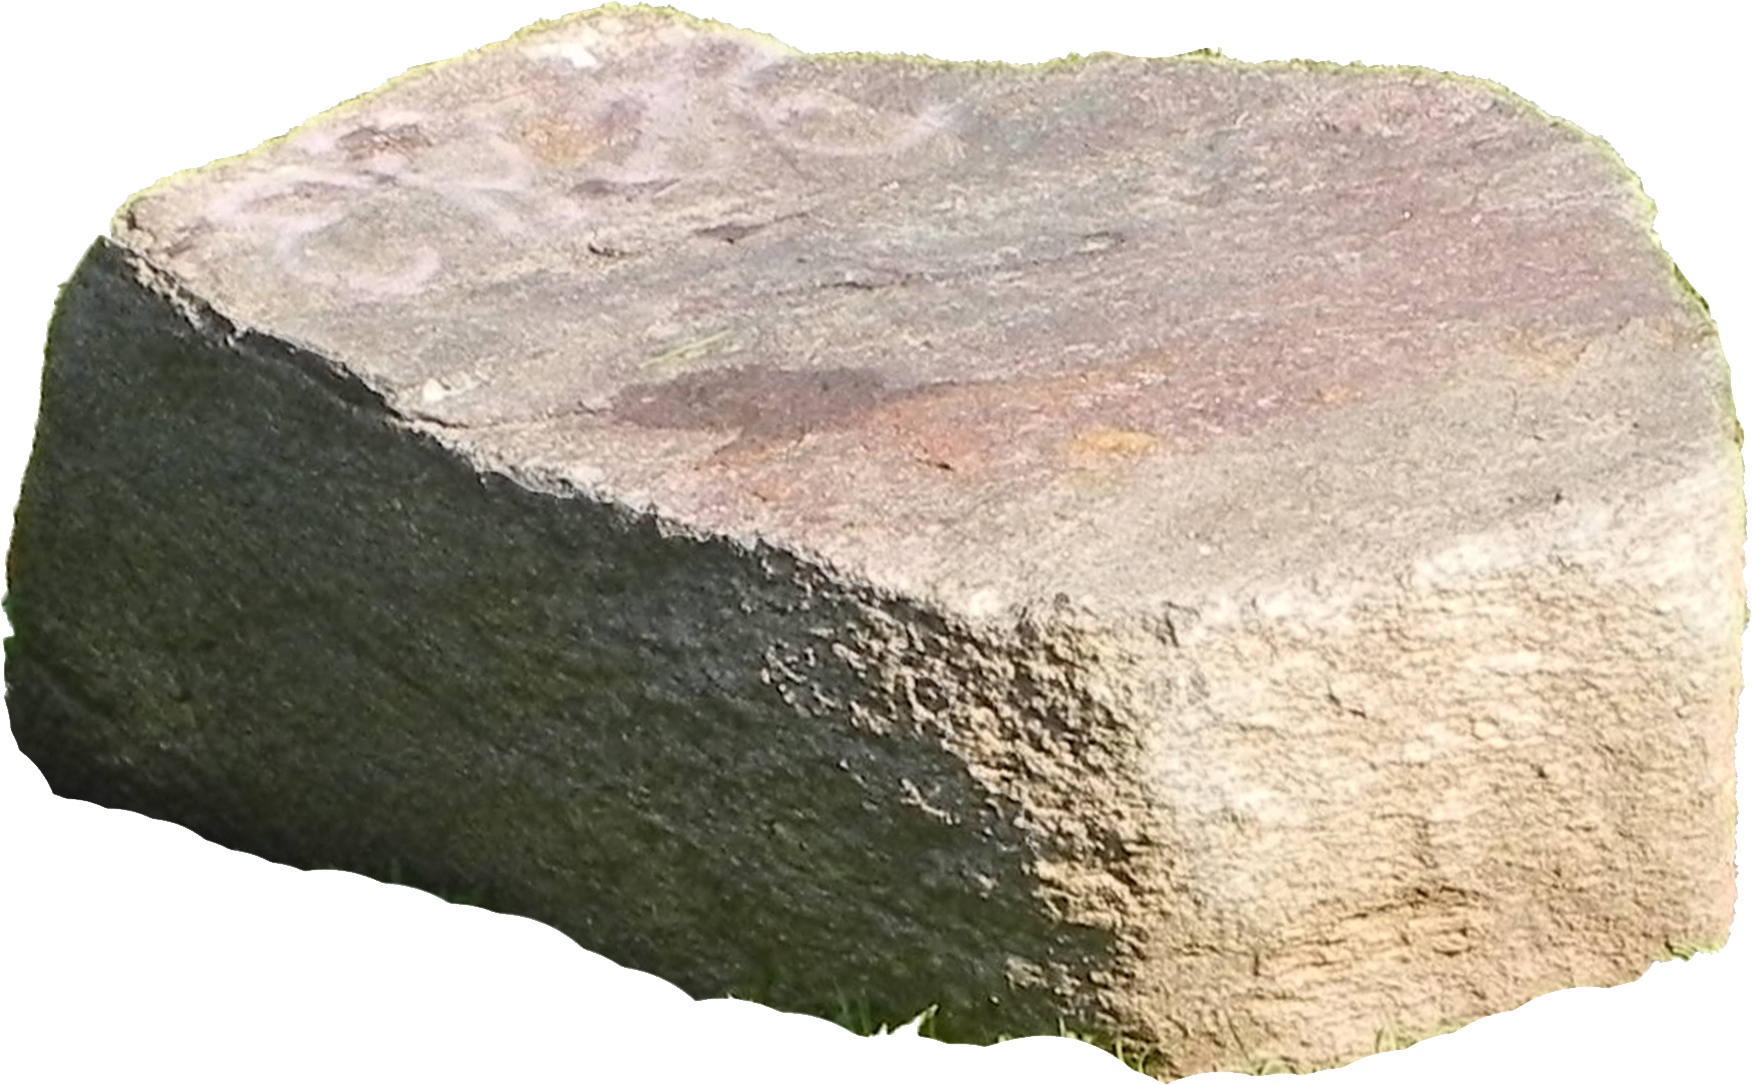 large flat rocks